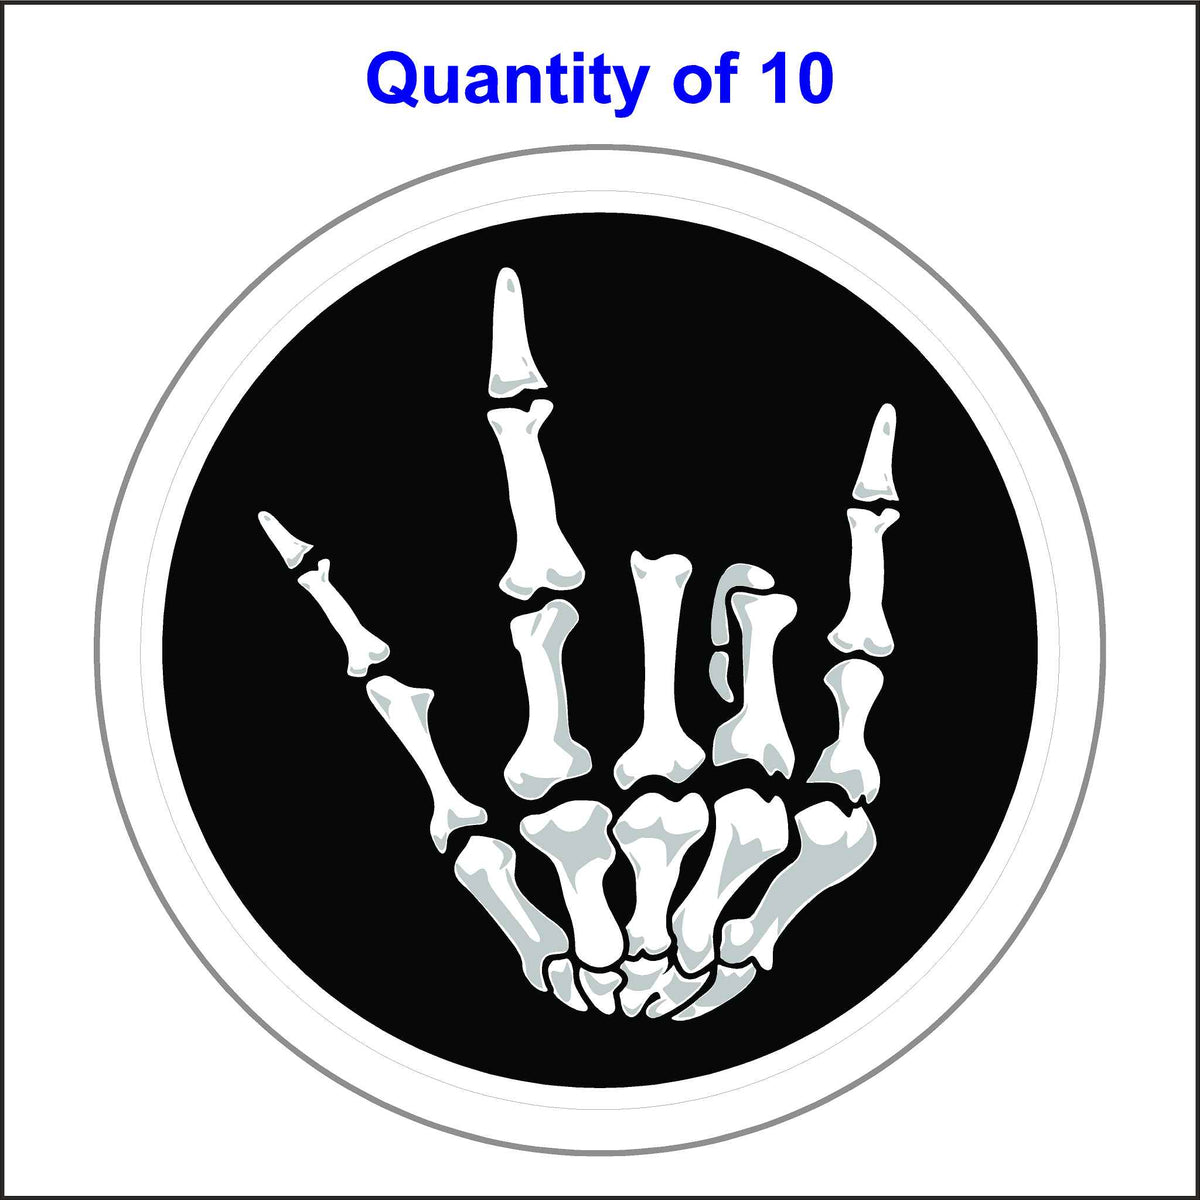 Skeleton Hand Rock on Stickers. 10 Quantity.